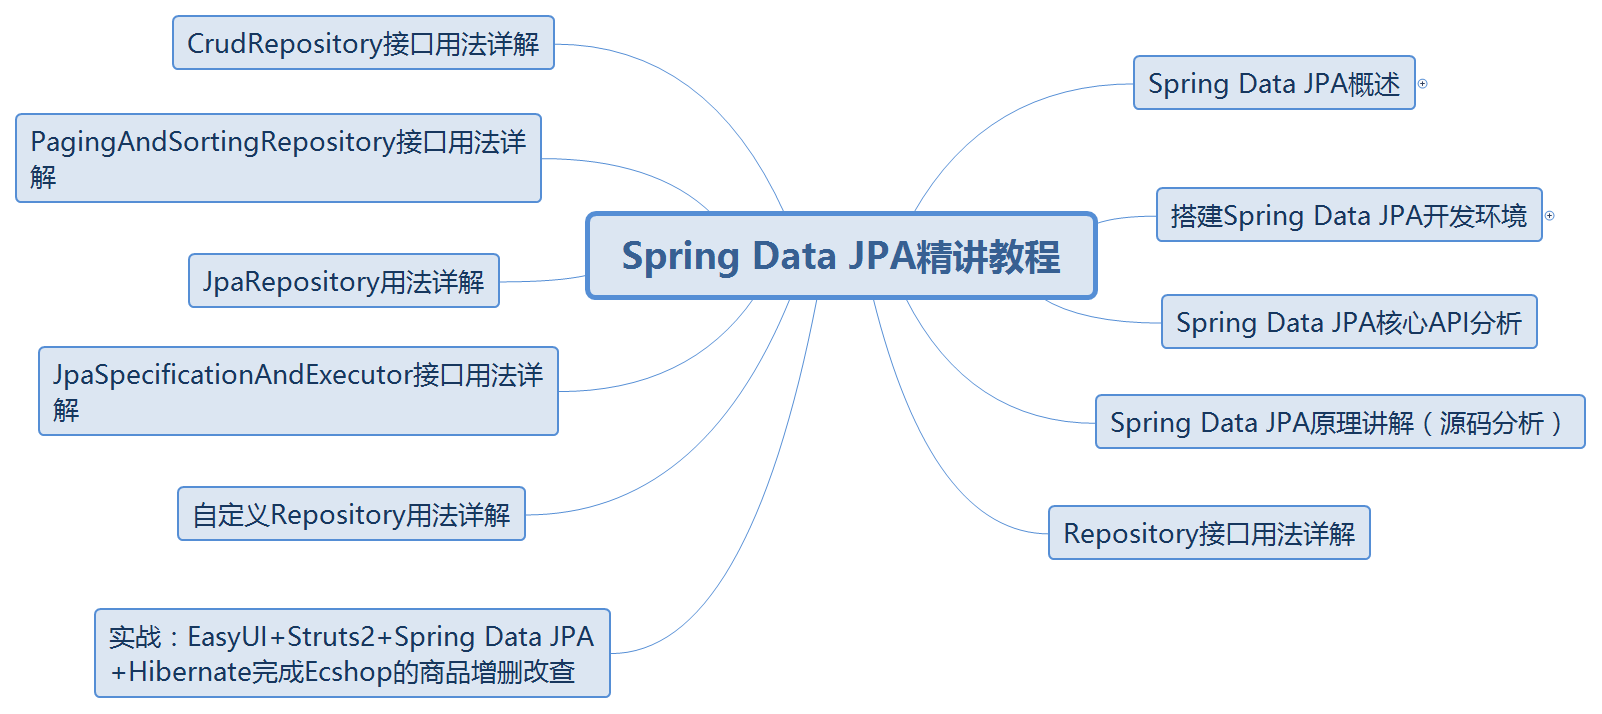 Spring Data JPA精讲教程.png